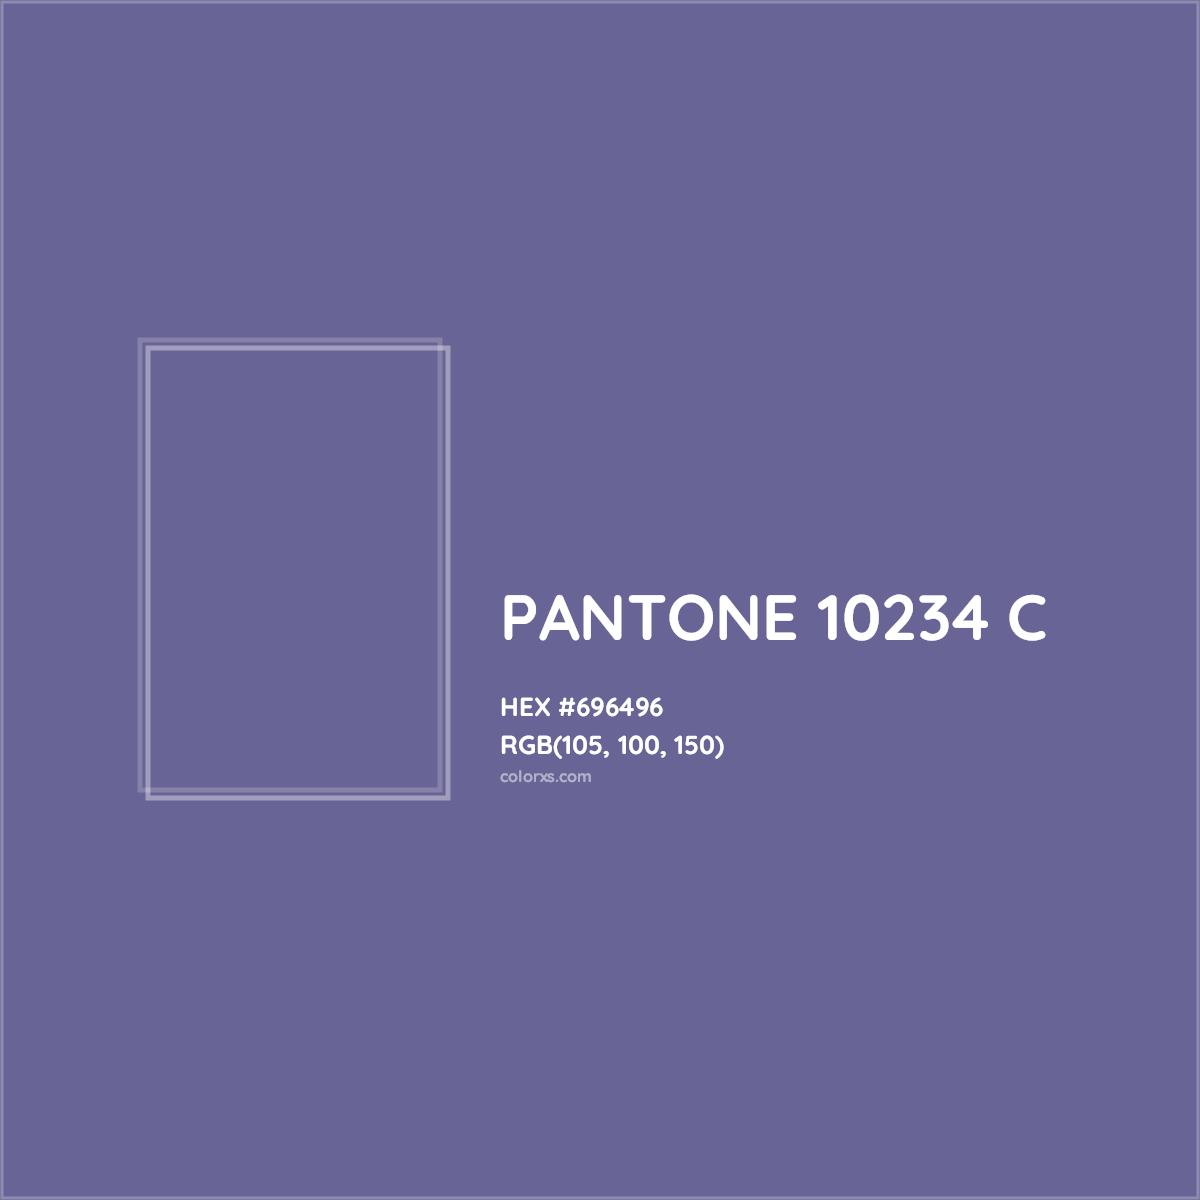 HEX #696496 PANTONE 10234 C CMS Pantone PMS - Color Code